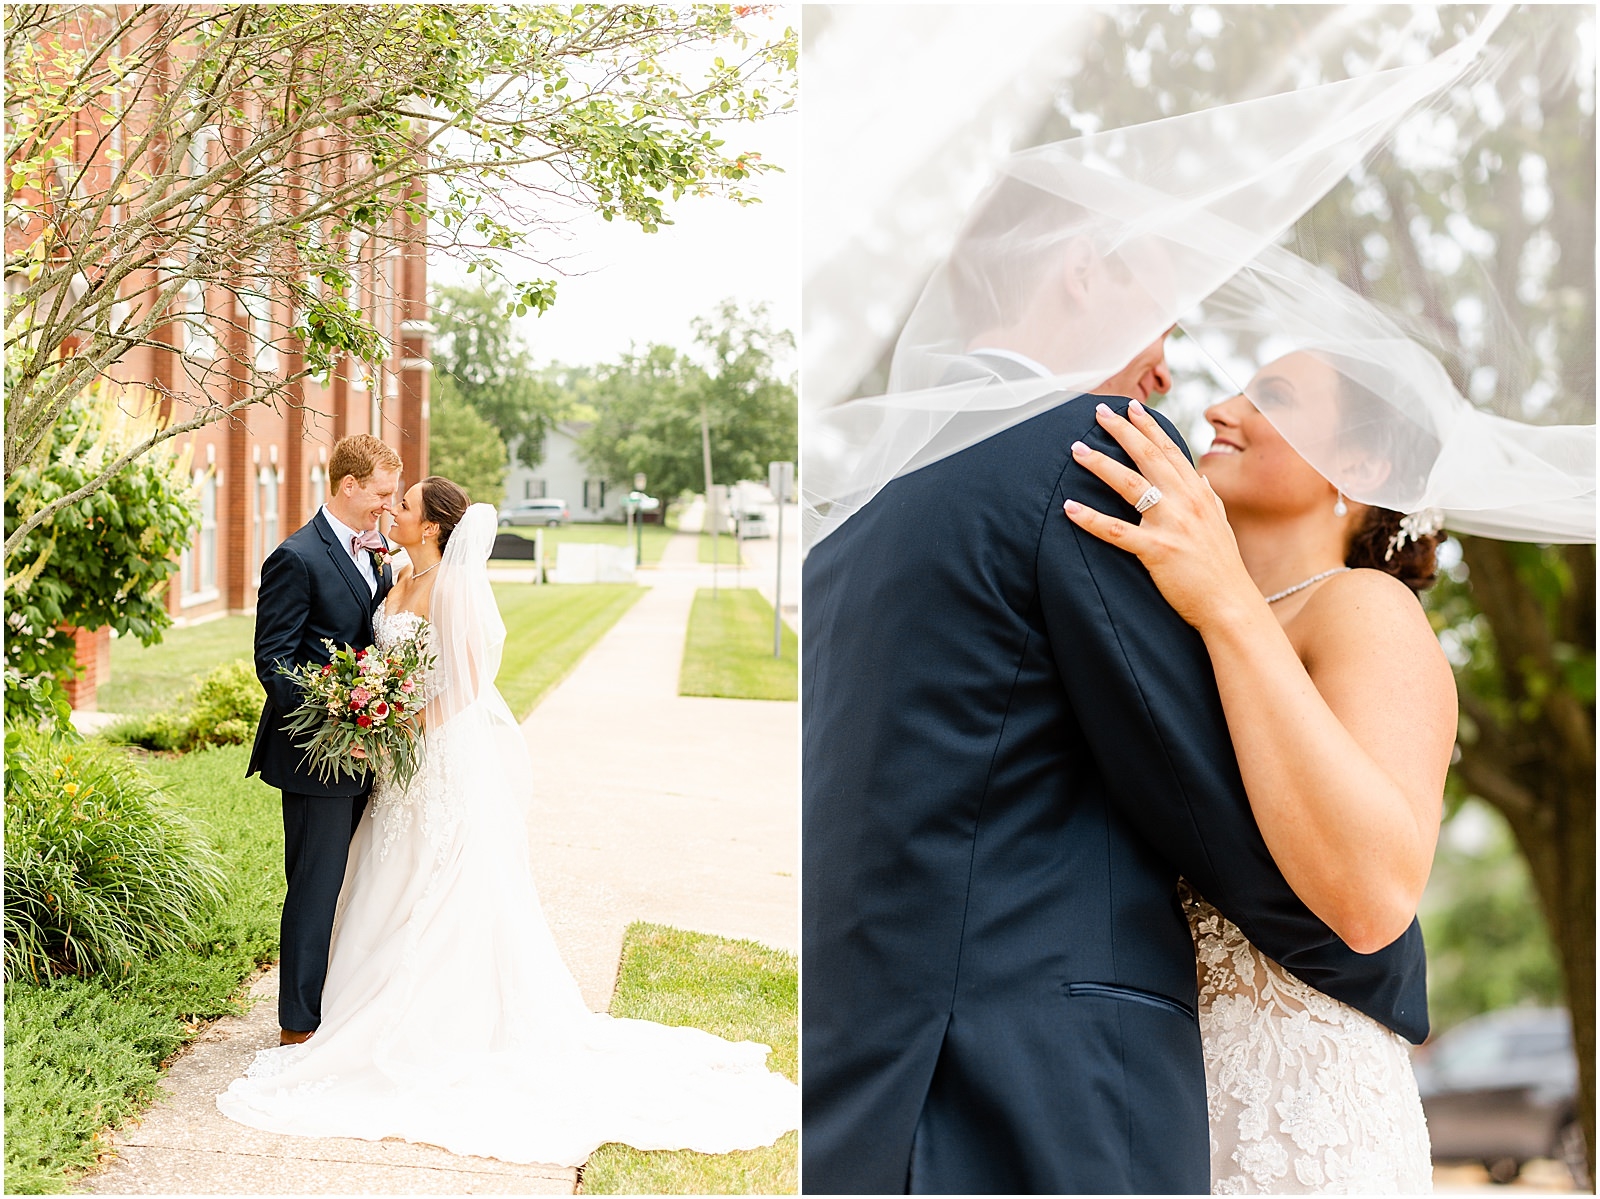 Deidra and Andrew | A Huntingburgh Indiana Wedding Bret and Brandie | Evansville Photographers | @bretandbrandie-0058.jpg